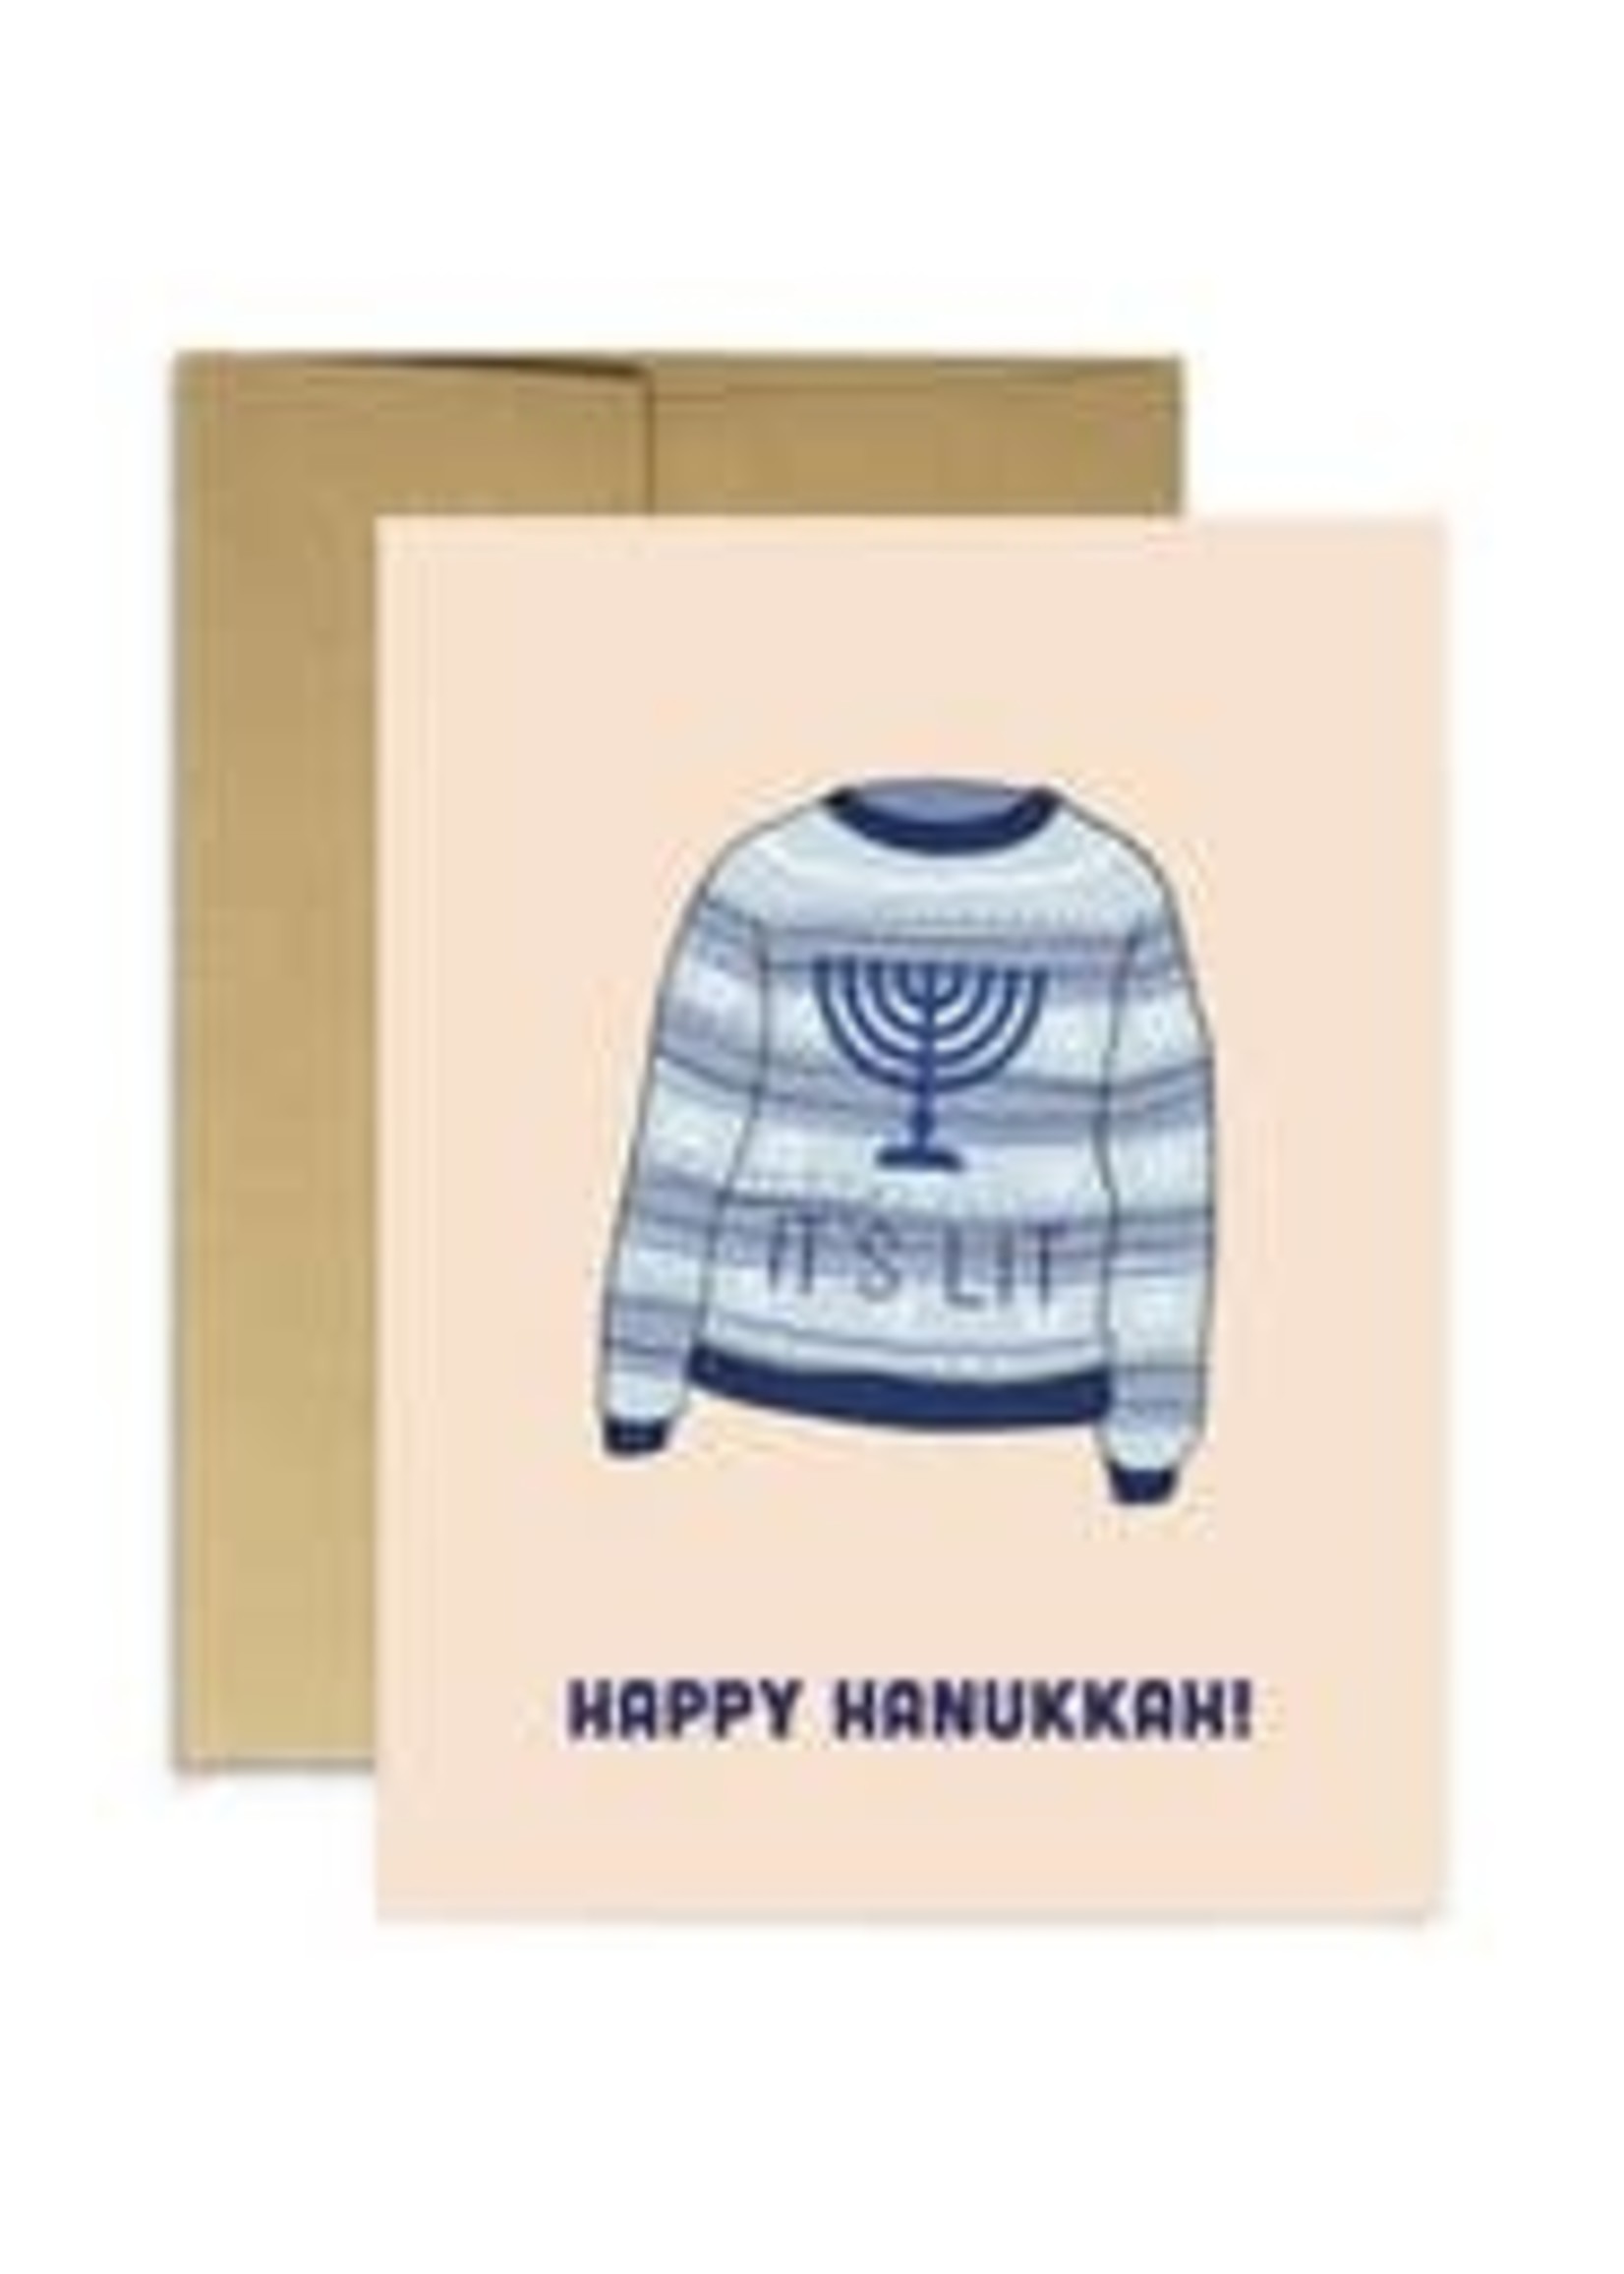 Party Mountain Paper co. Party Mountain It's Lit Hanukkah Card